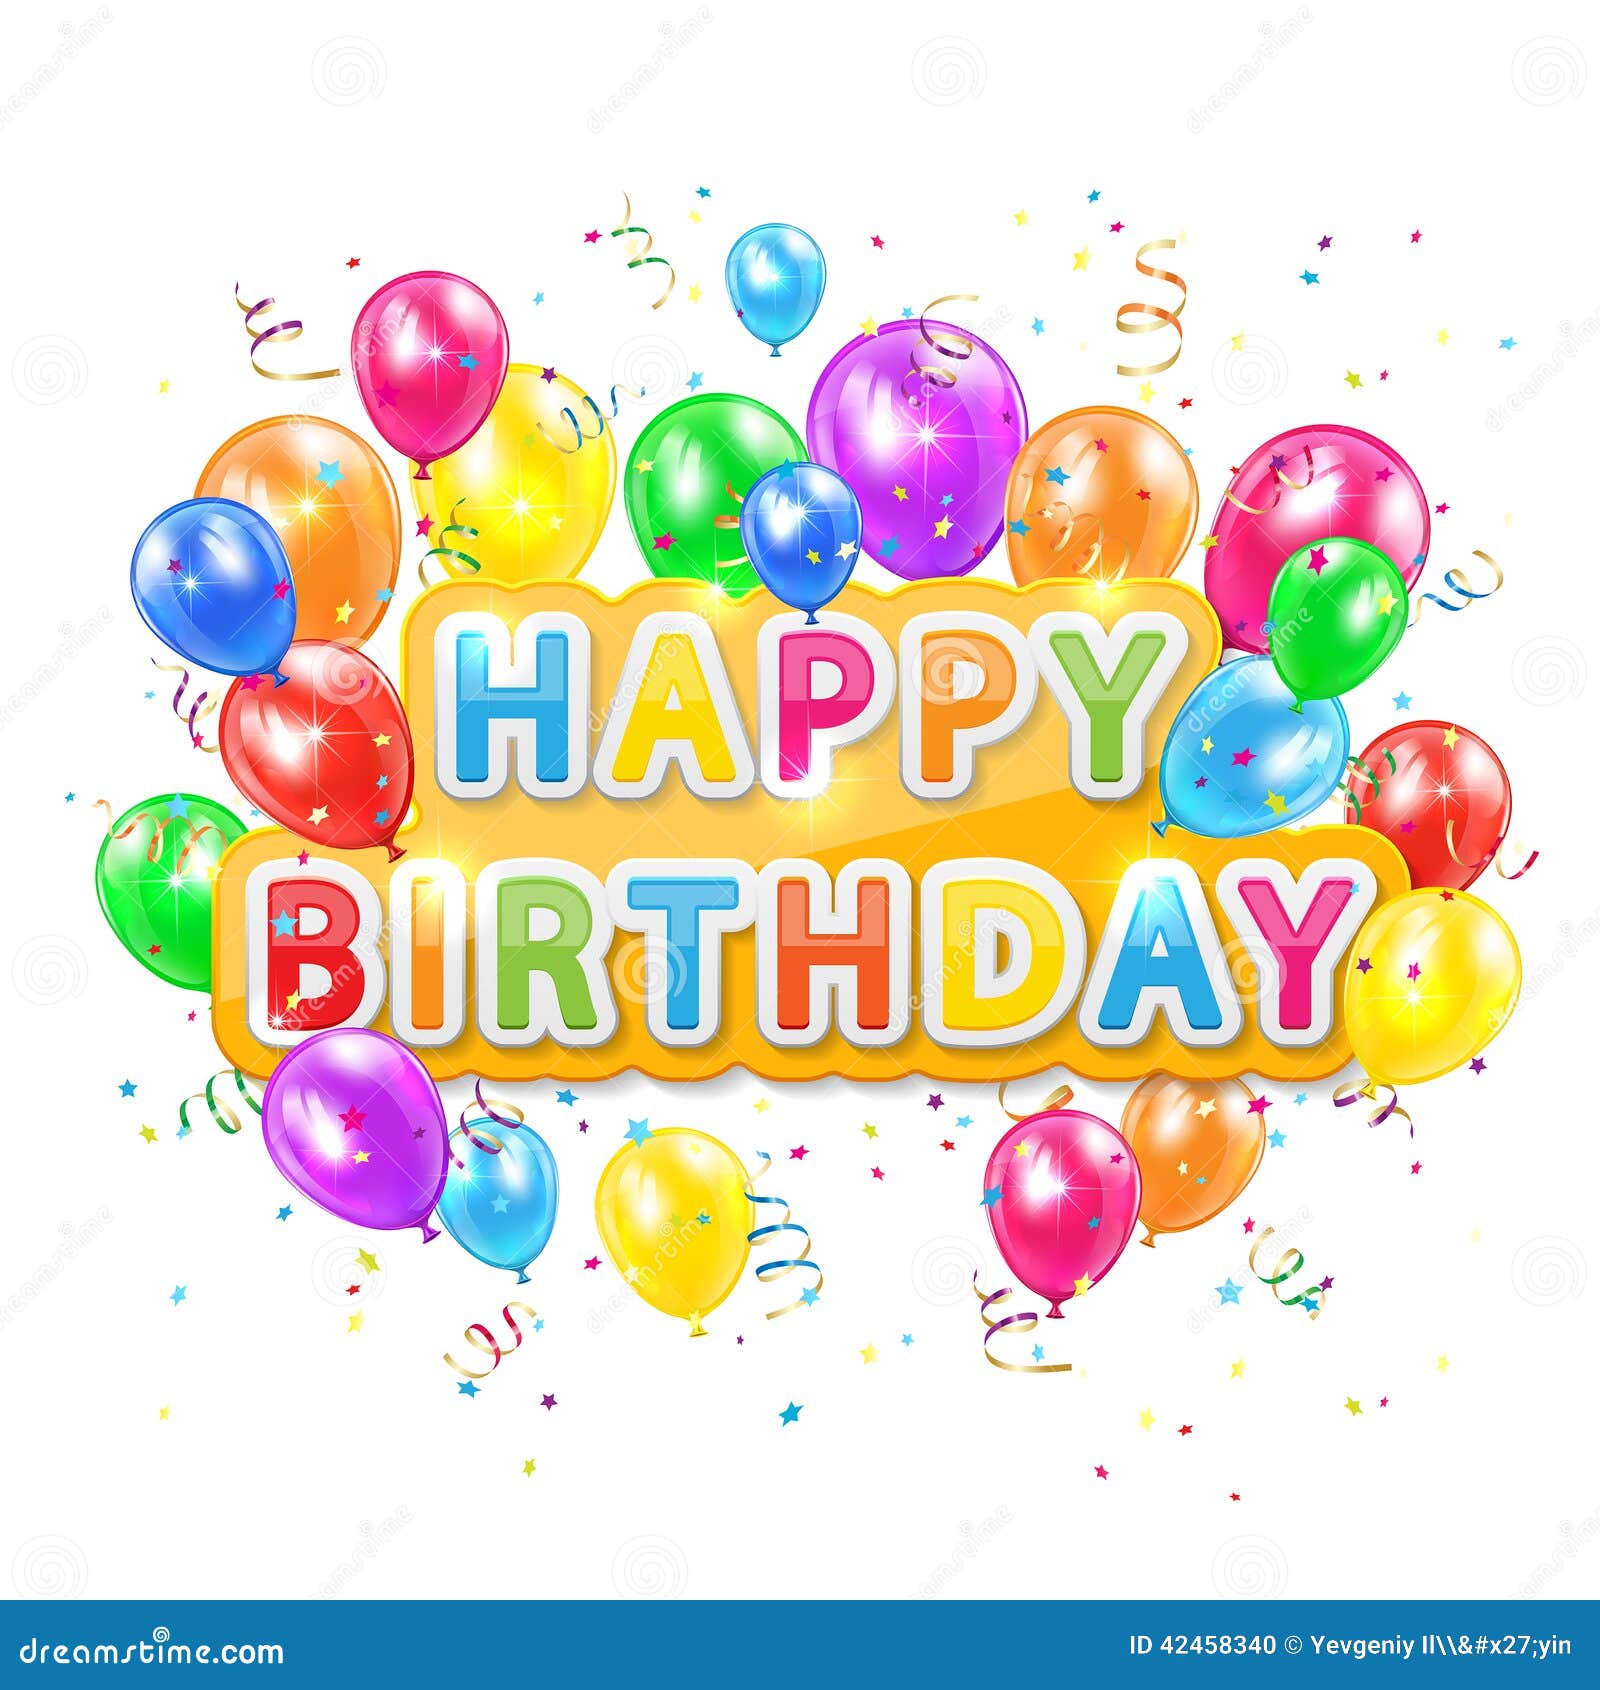 Happy birthday background stock vector. Illustration of balloon - 42458340